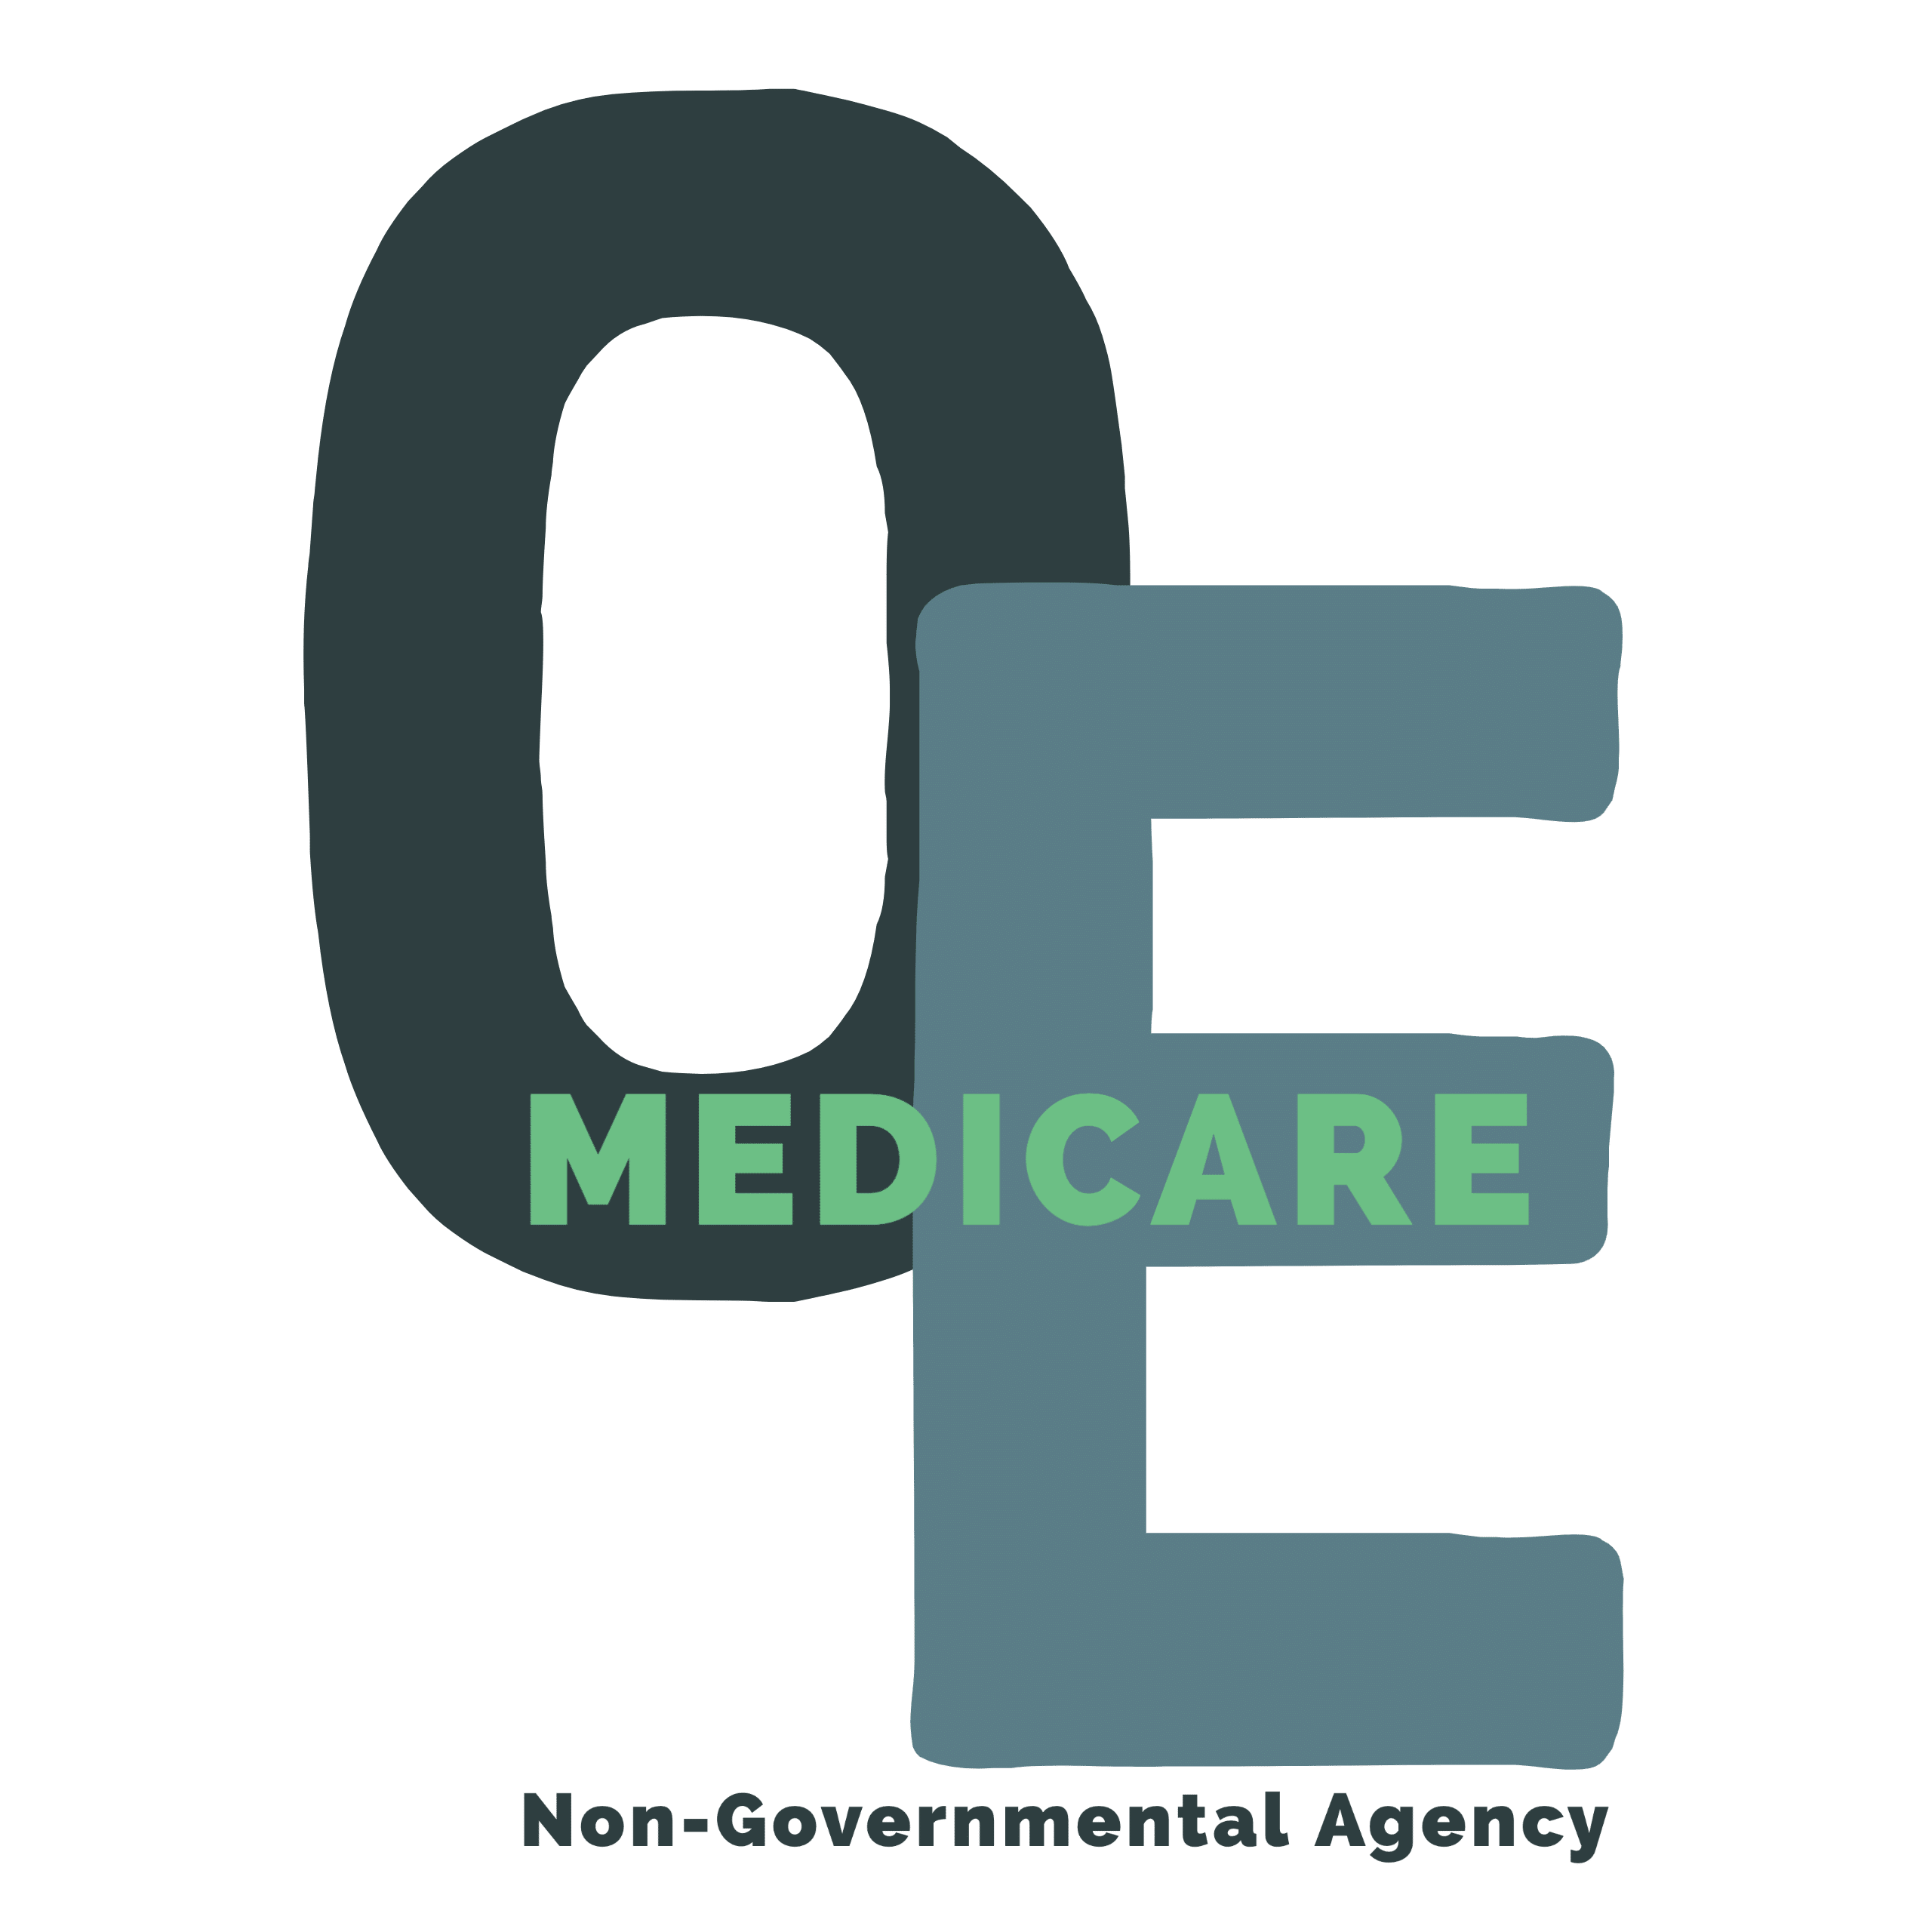 MedicareOE